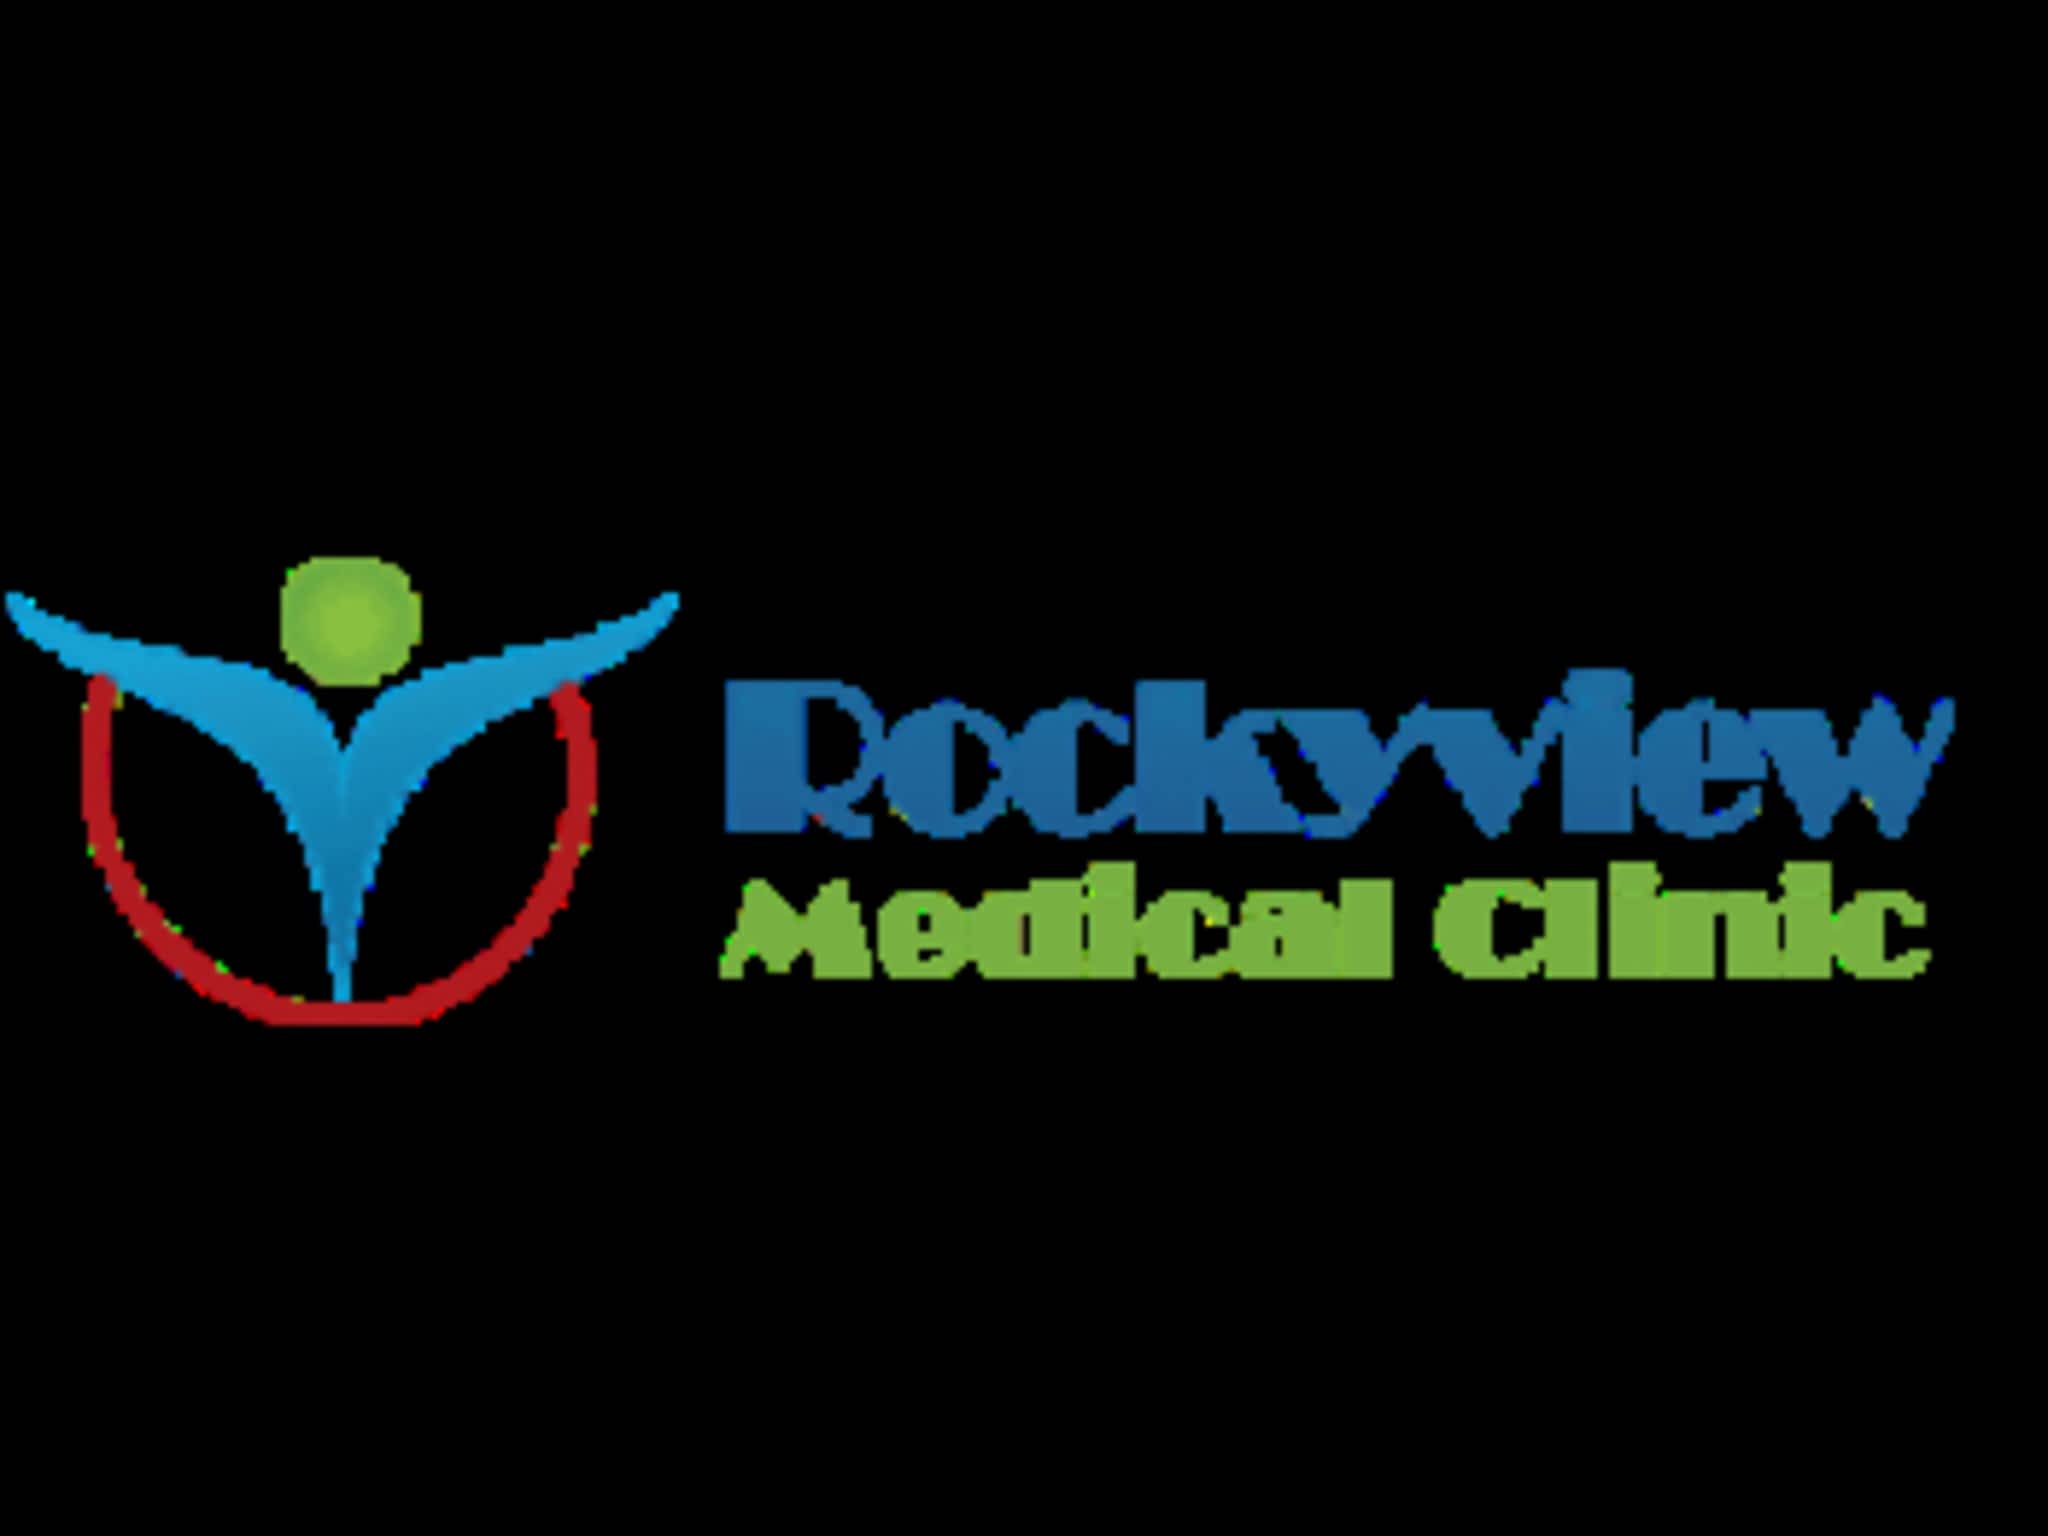 photo Rockyview Medical Clinic